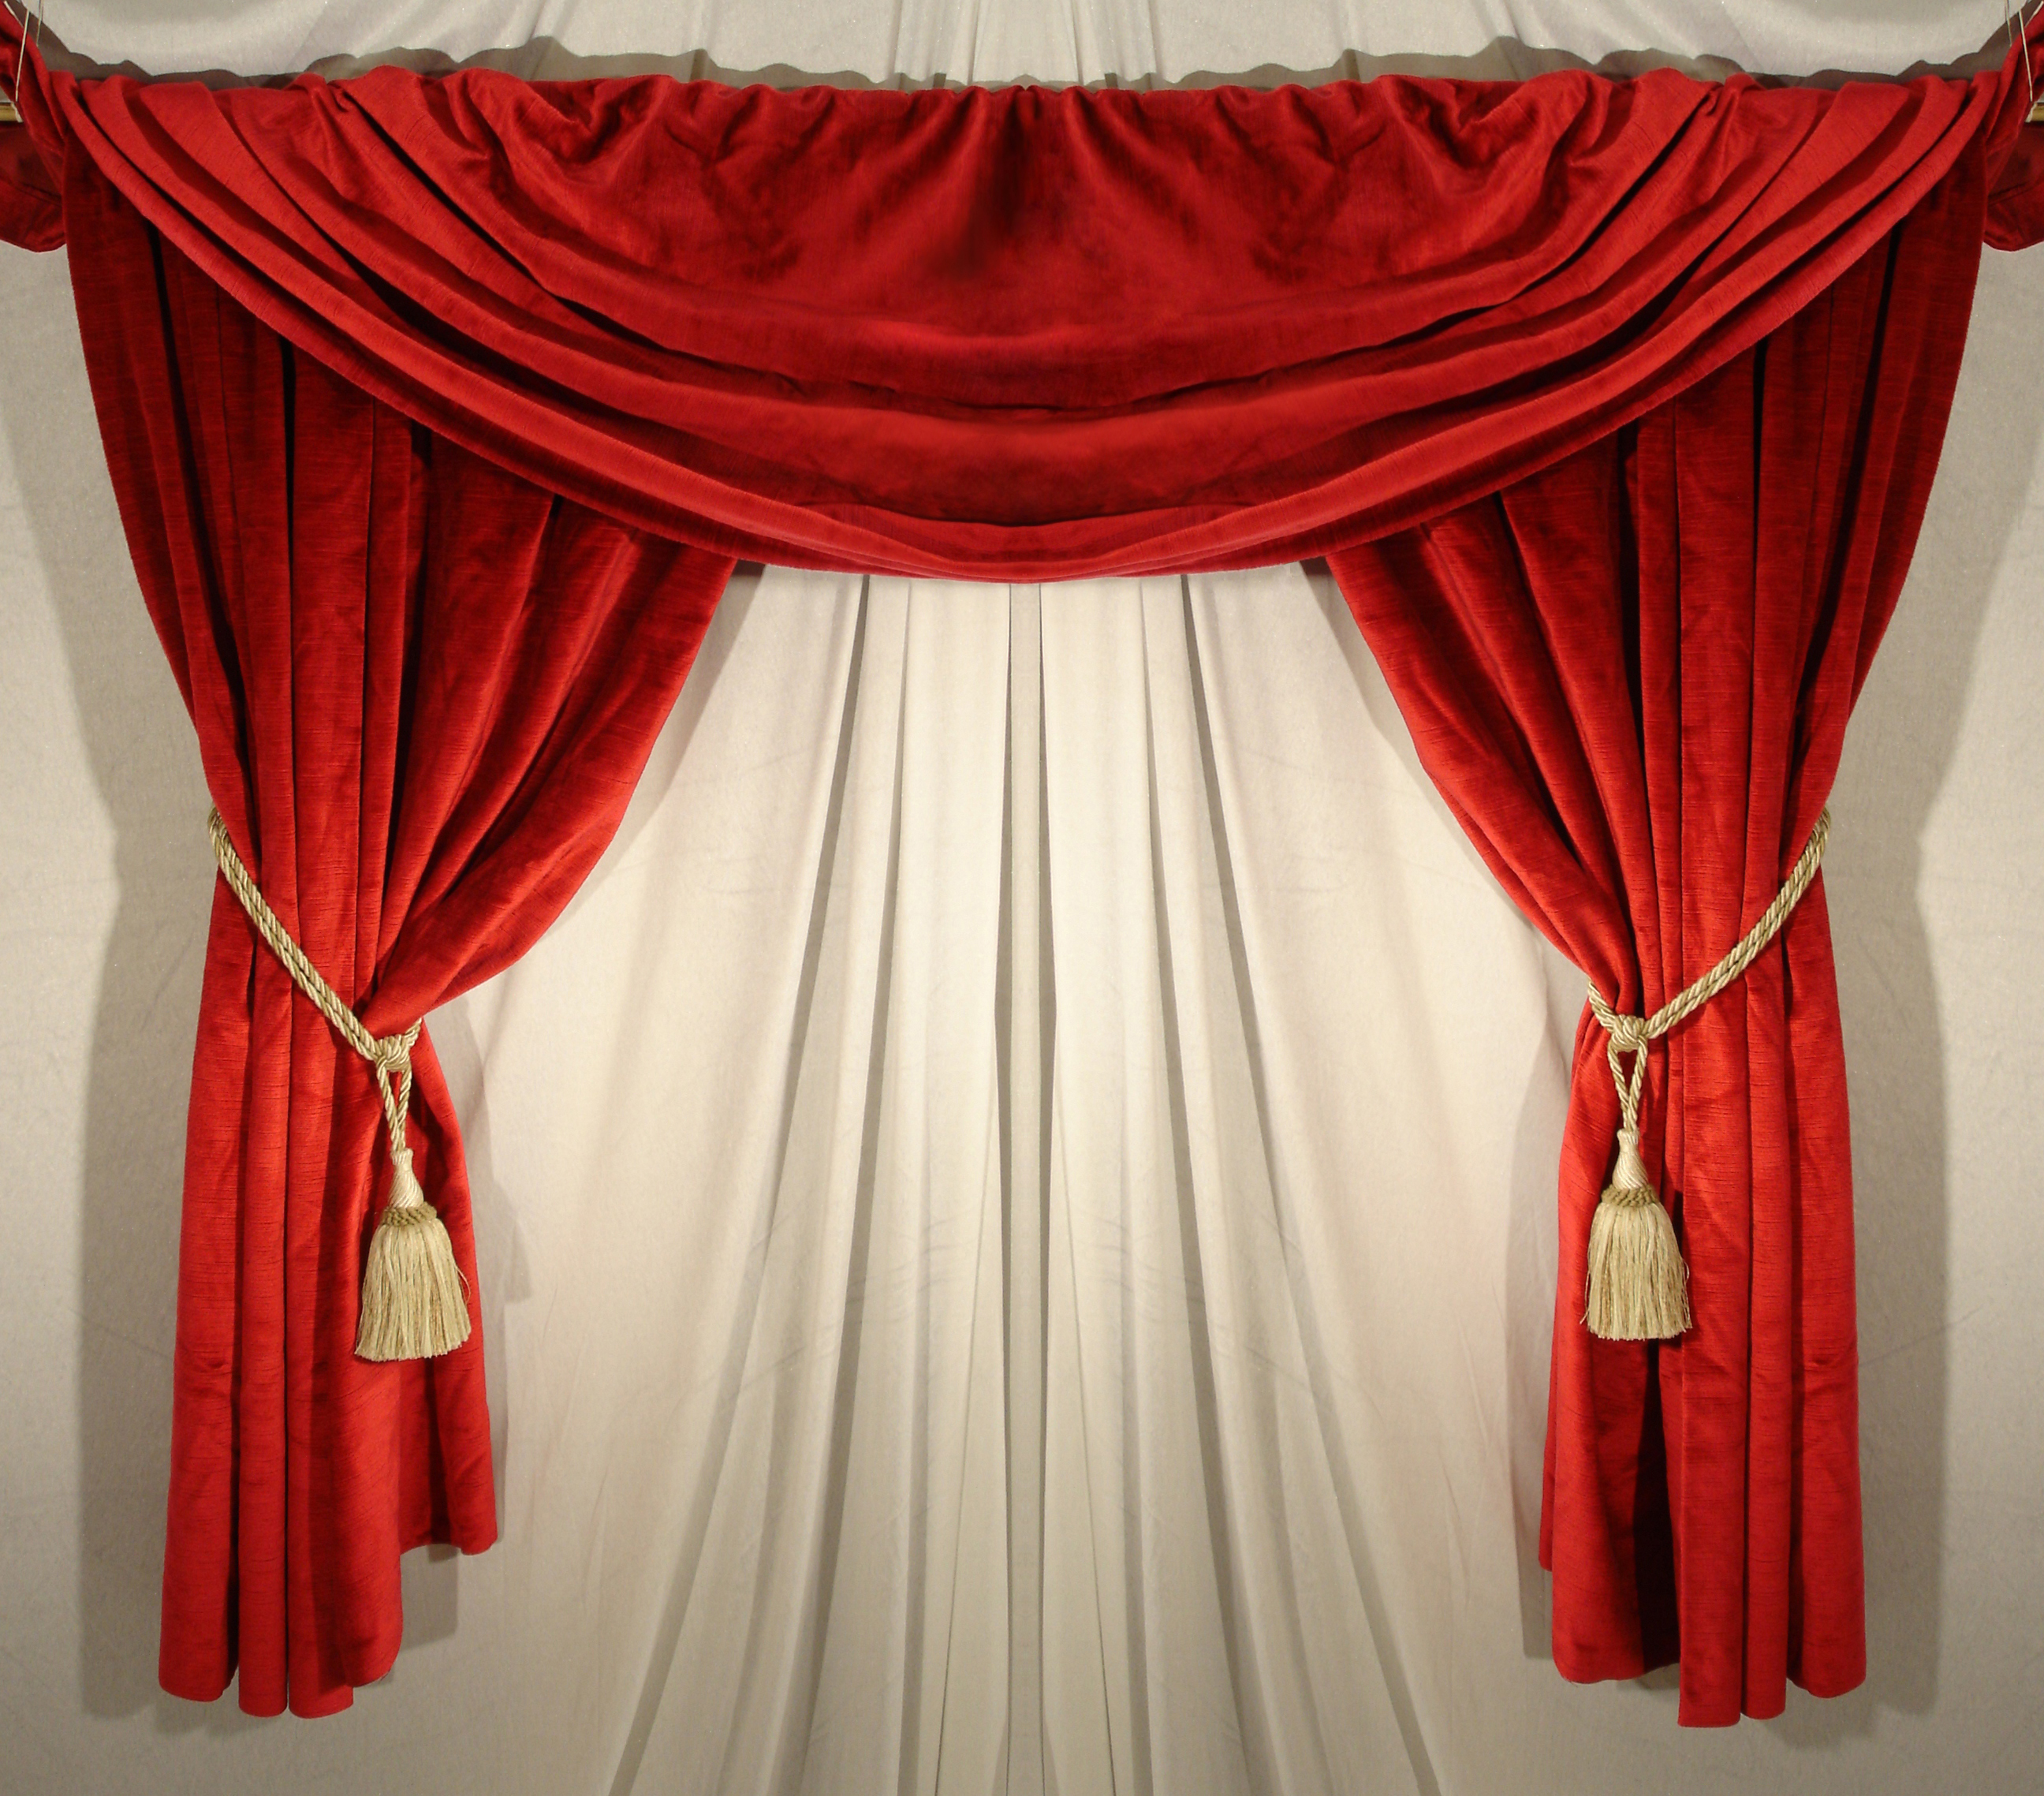 curtains | Explore curtains on DeviantArt